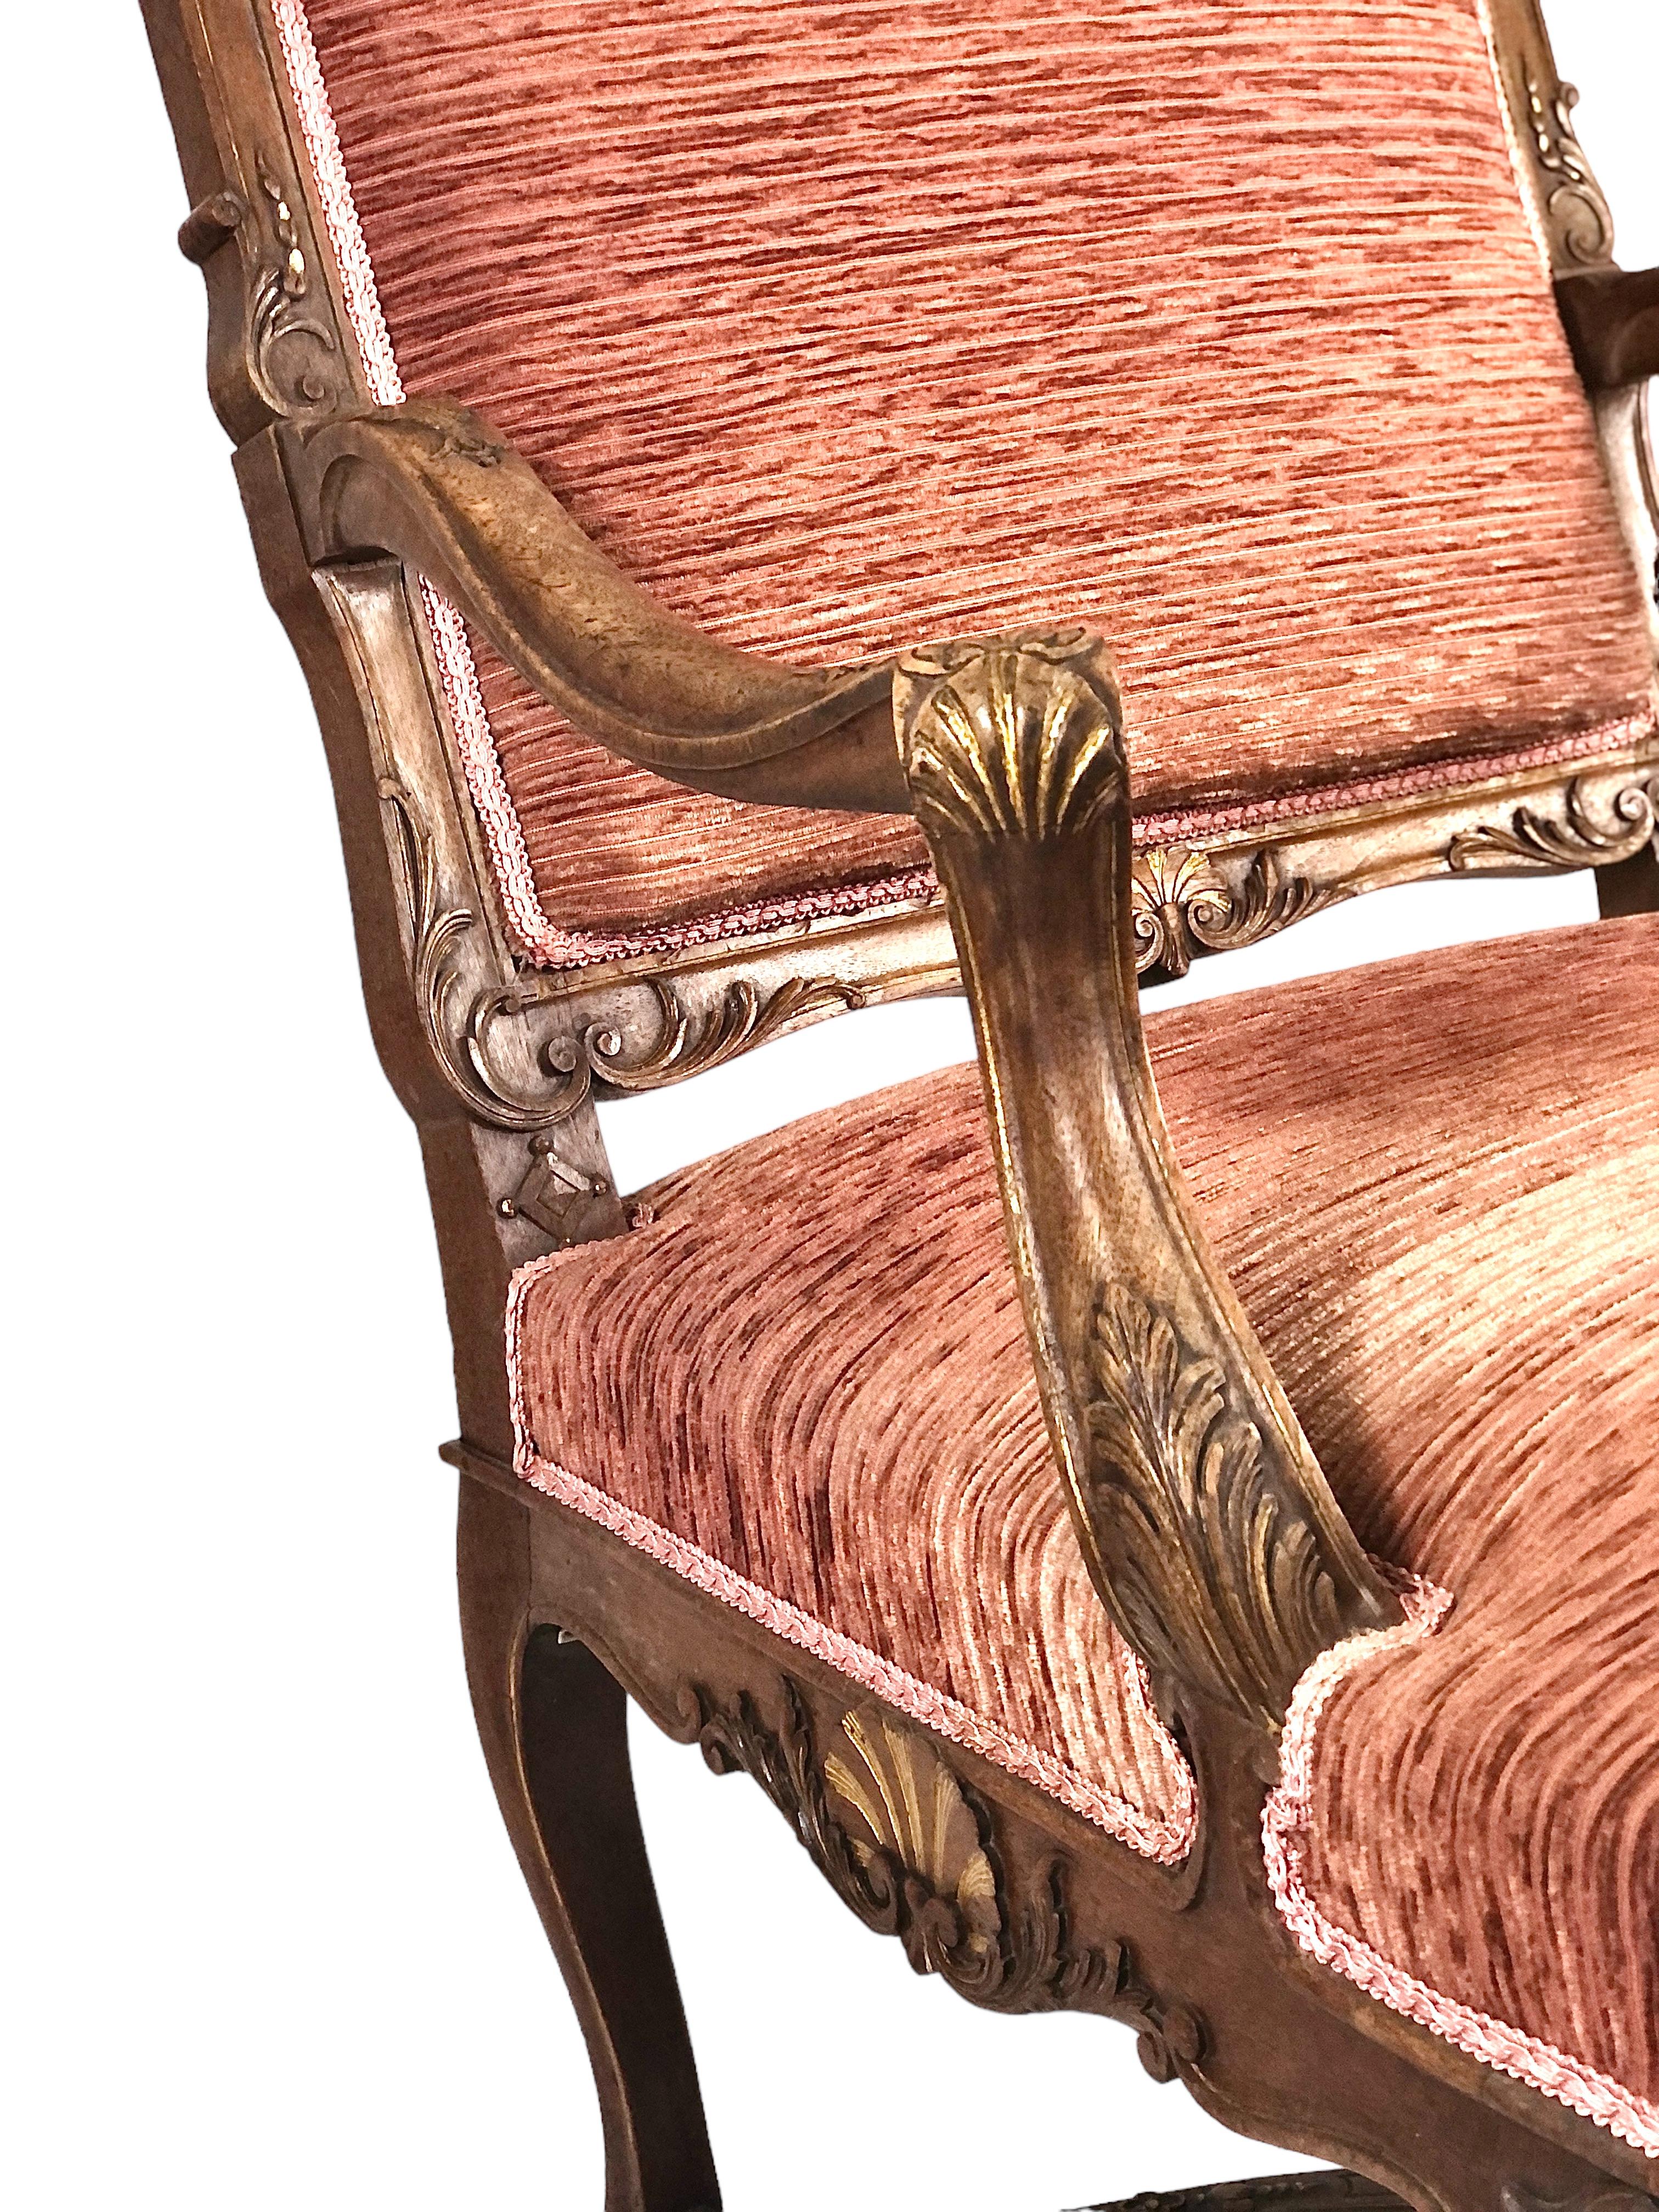 19th Century Pair of Walnut Regency Chairs Called “Fauteuils à La Reine” For Sale 11